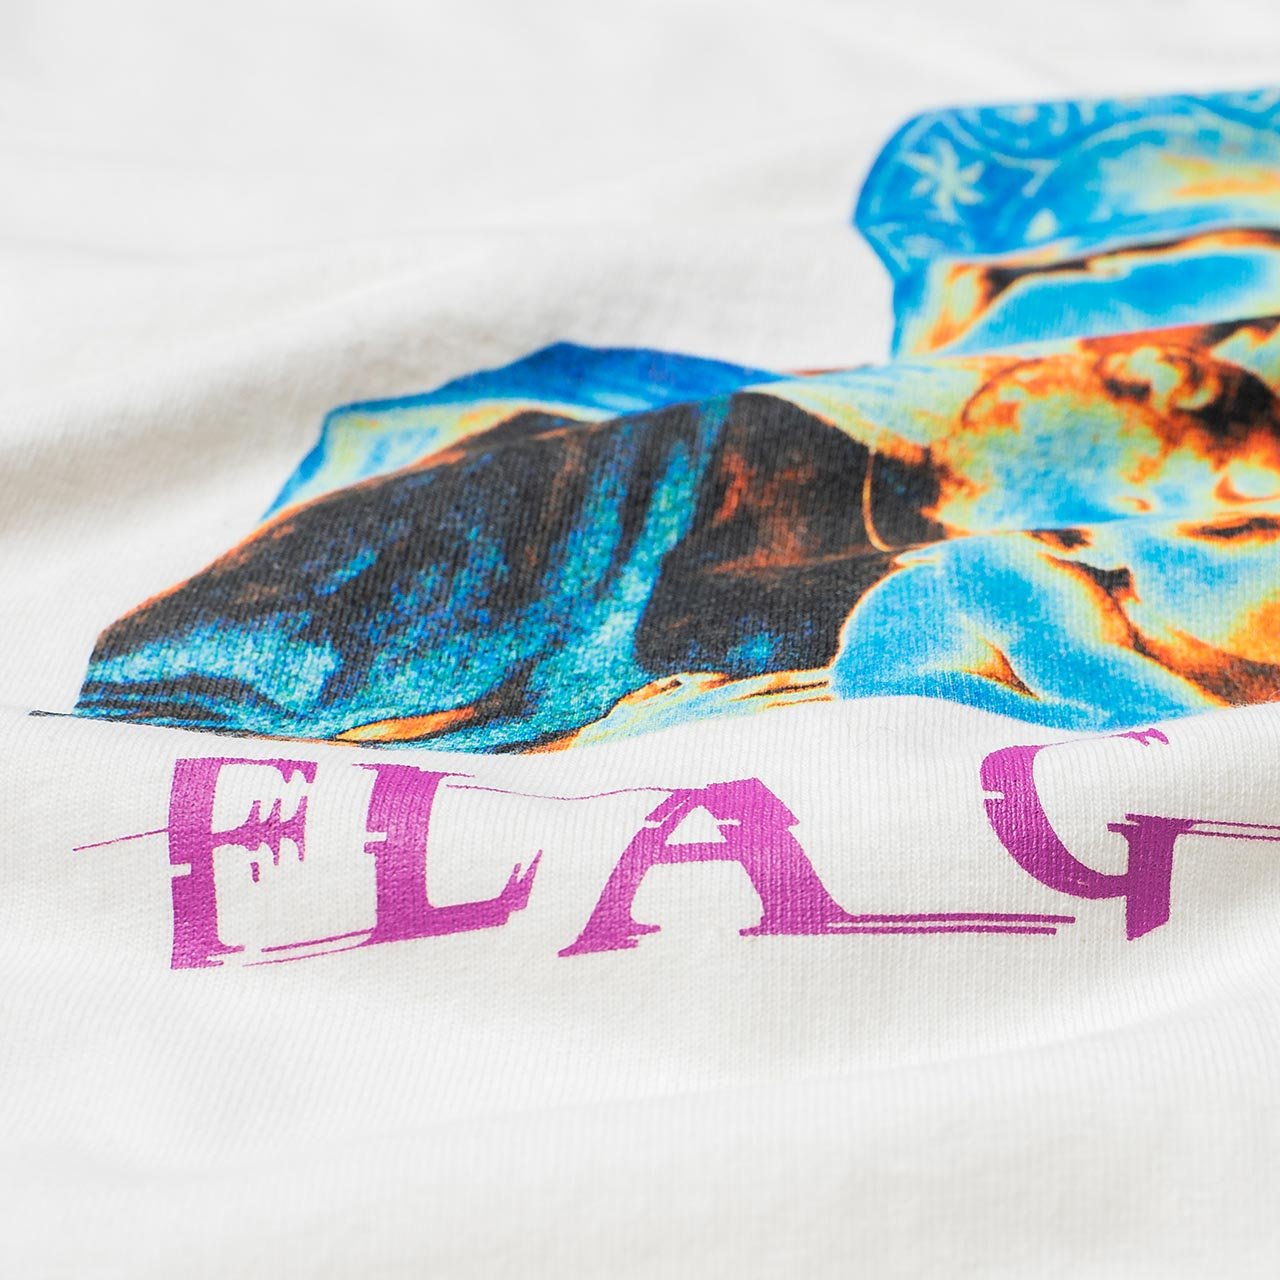 flagstuff "wish" t-shirt (white) - 19aw-fs-55 - a.plus - Image - 3